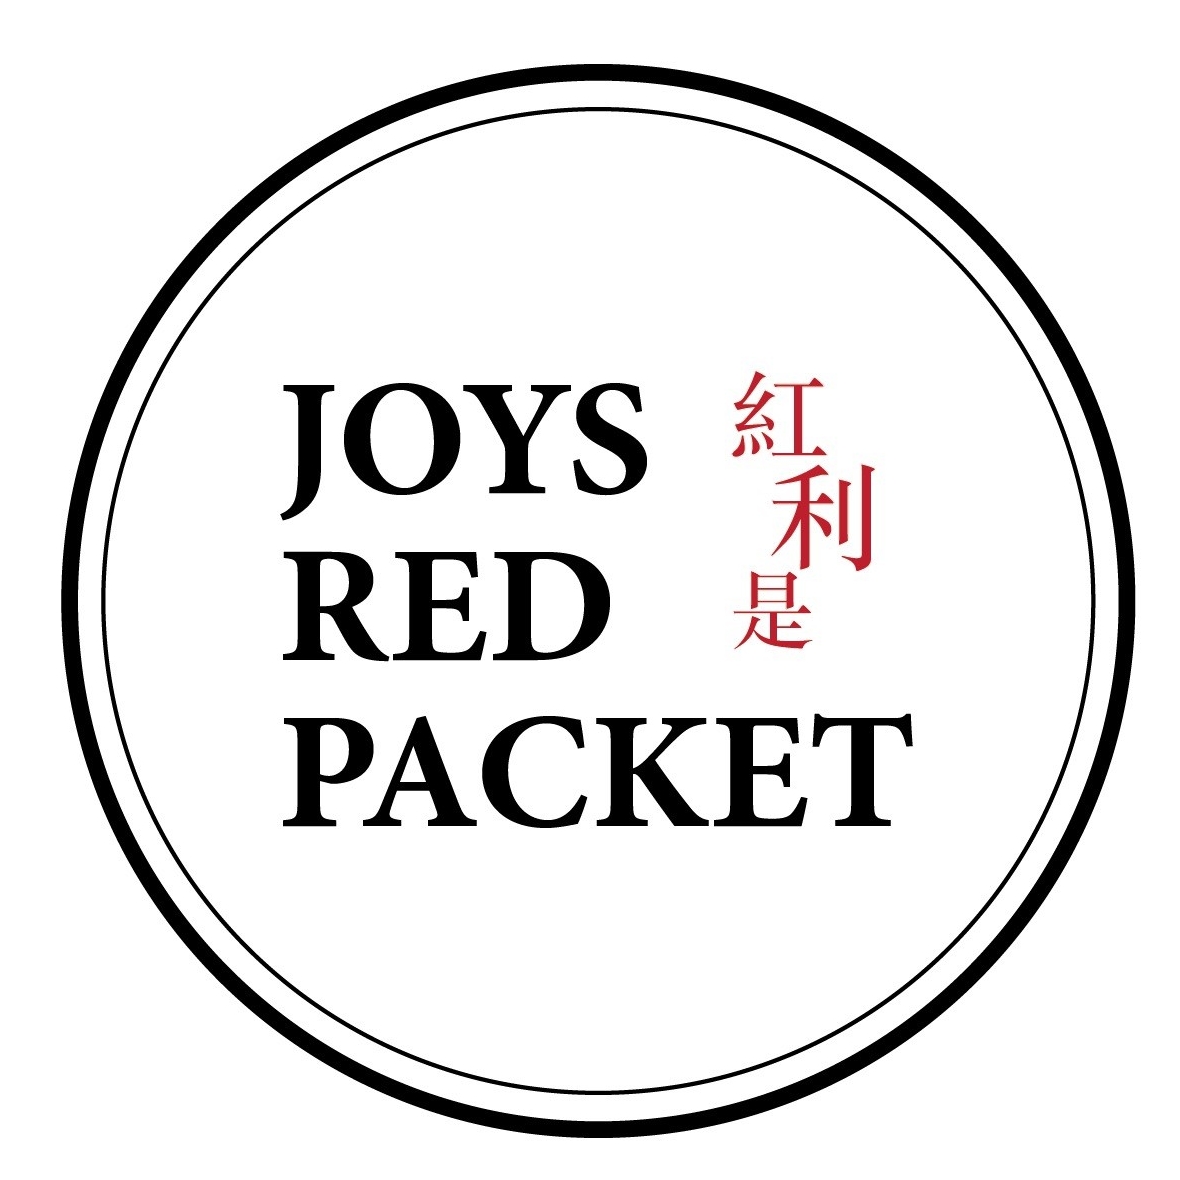 Red Packet Design & Customization